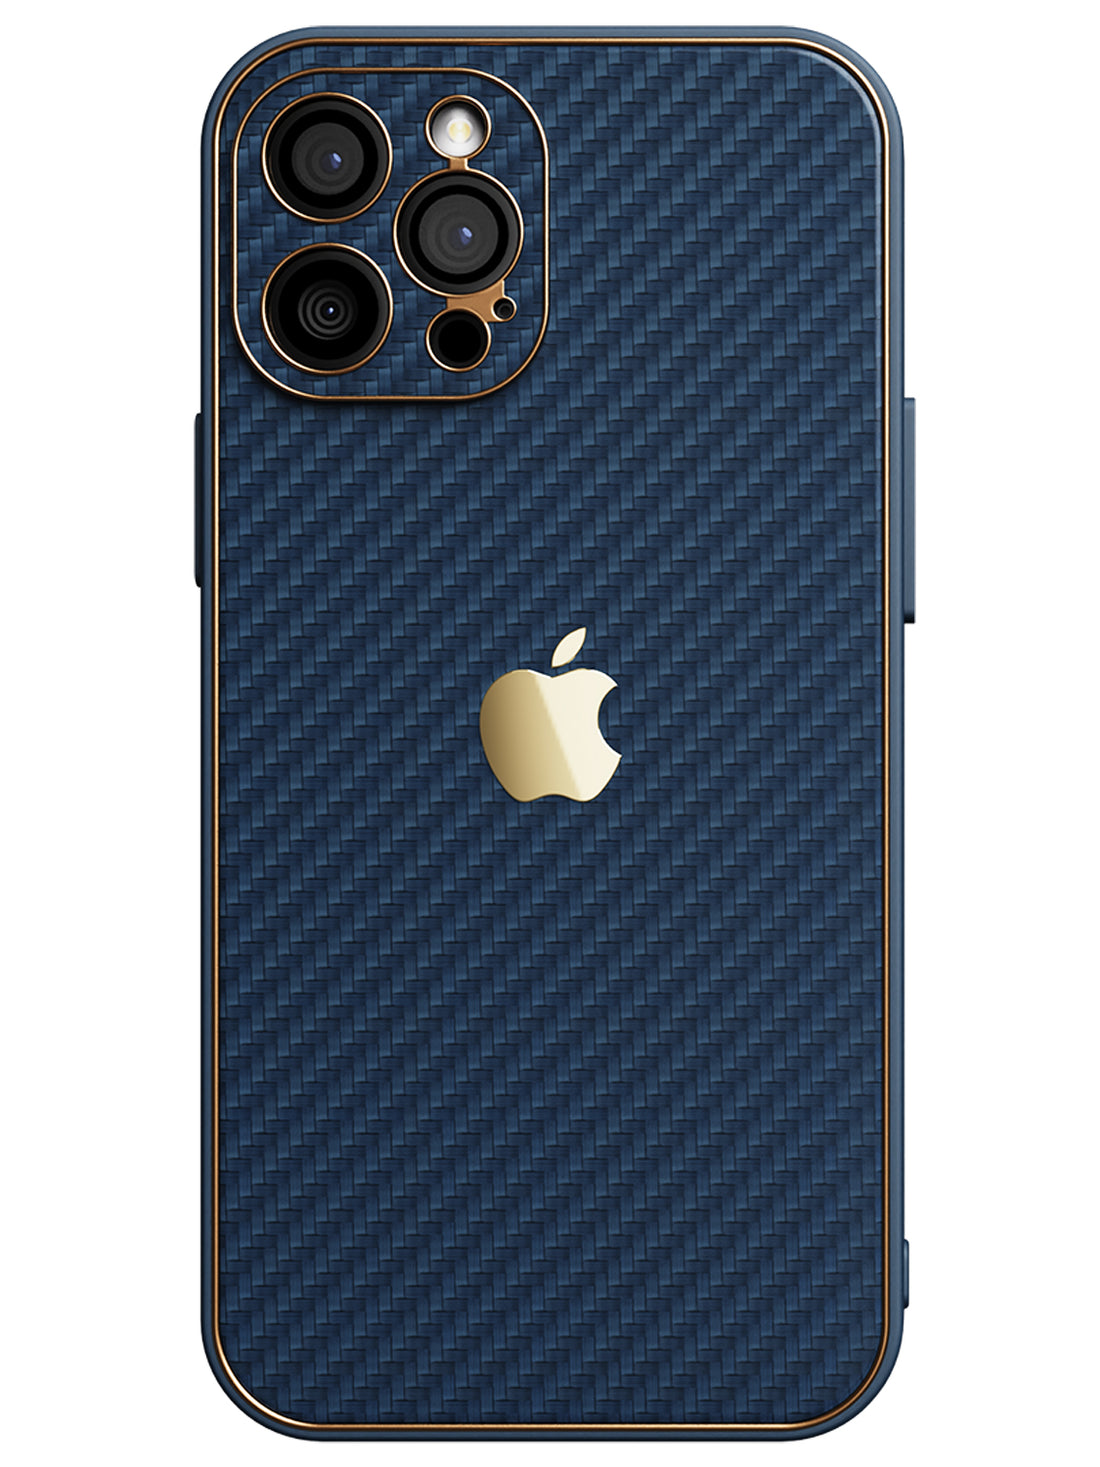 Carbon Leather Chrome Case - iPhone 12 Pro Max (Navy Blue)